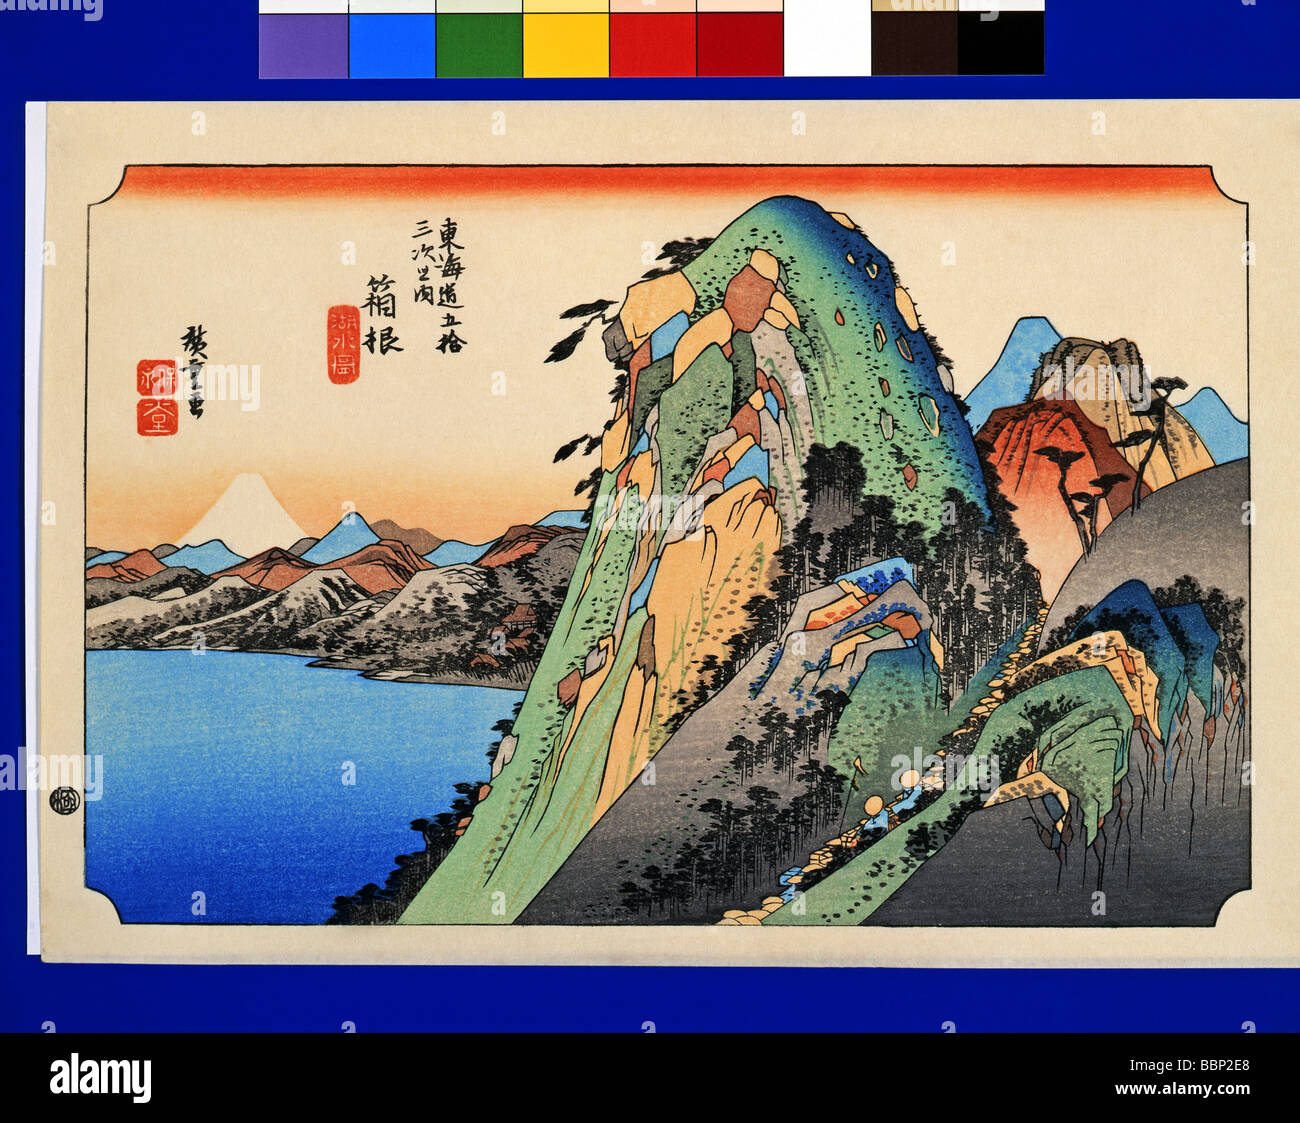 Utagawa Hiroshige, The Fifty-three Stations of the Tokaido, Hakone, Stock Photo